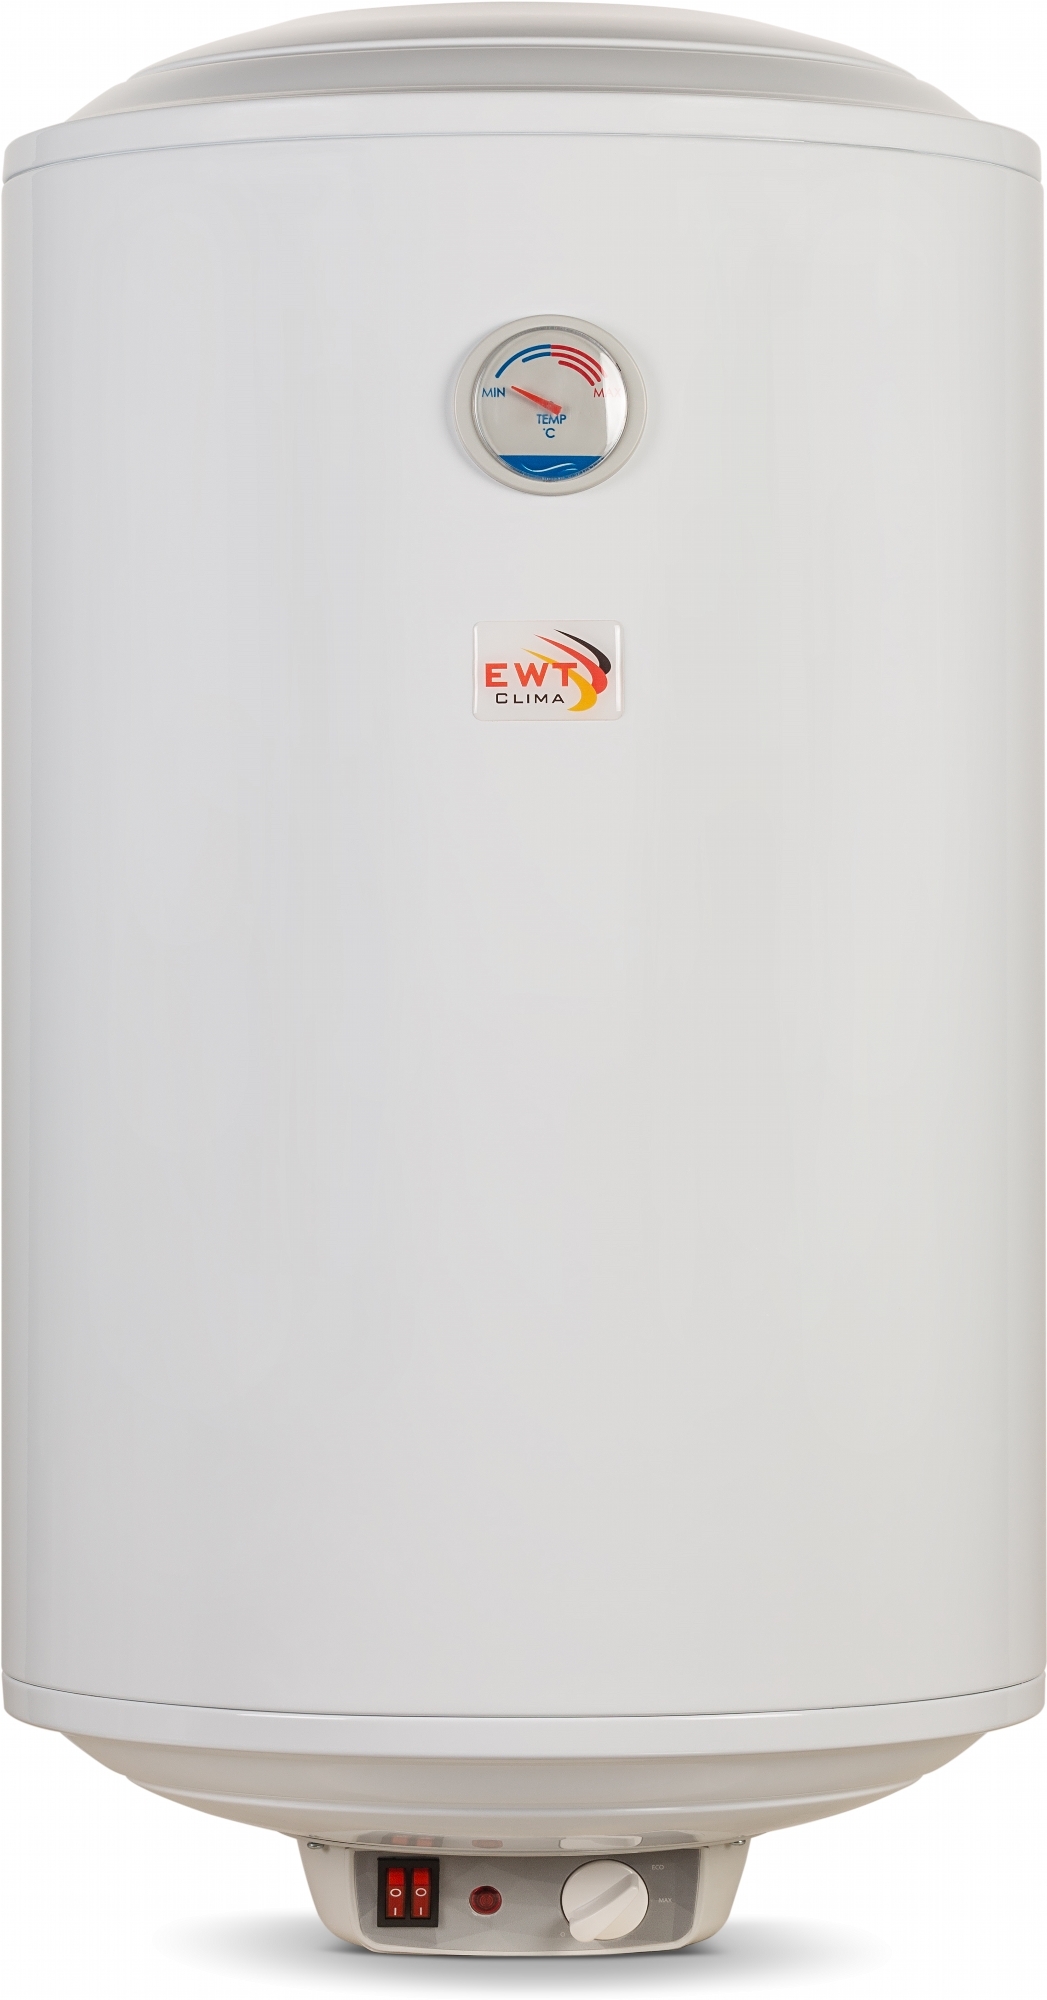 Бойлер EWT Clima Runde Dry AWH/M 80 V в интернет-магазине, главное фото